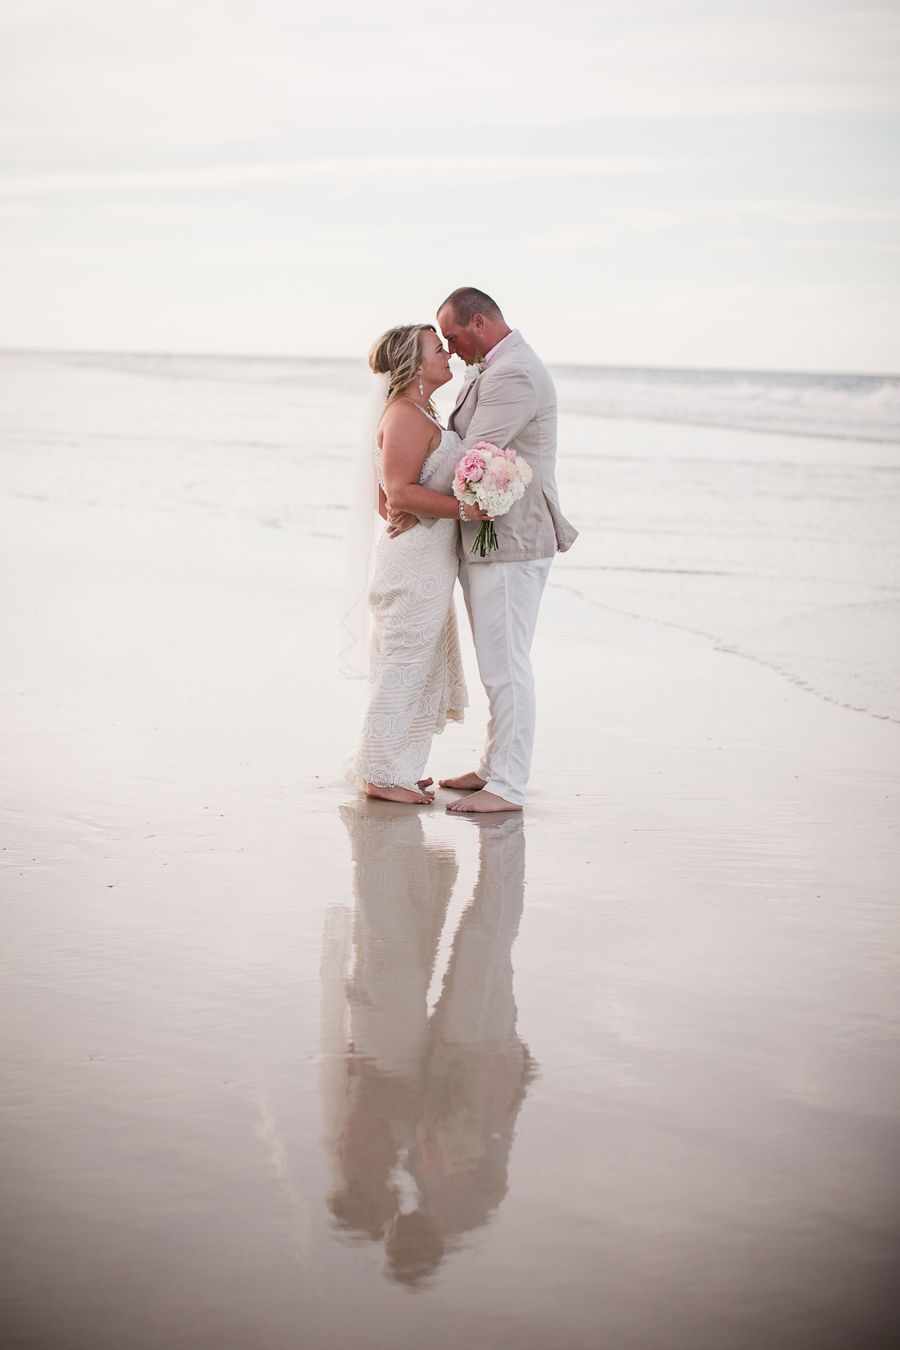 Reflection on sand at this Daytona Beach Wedding by Destination Wedding Photographer, Amanda May Photos.